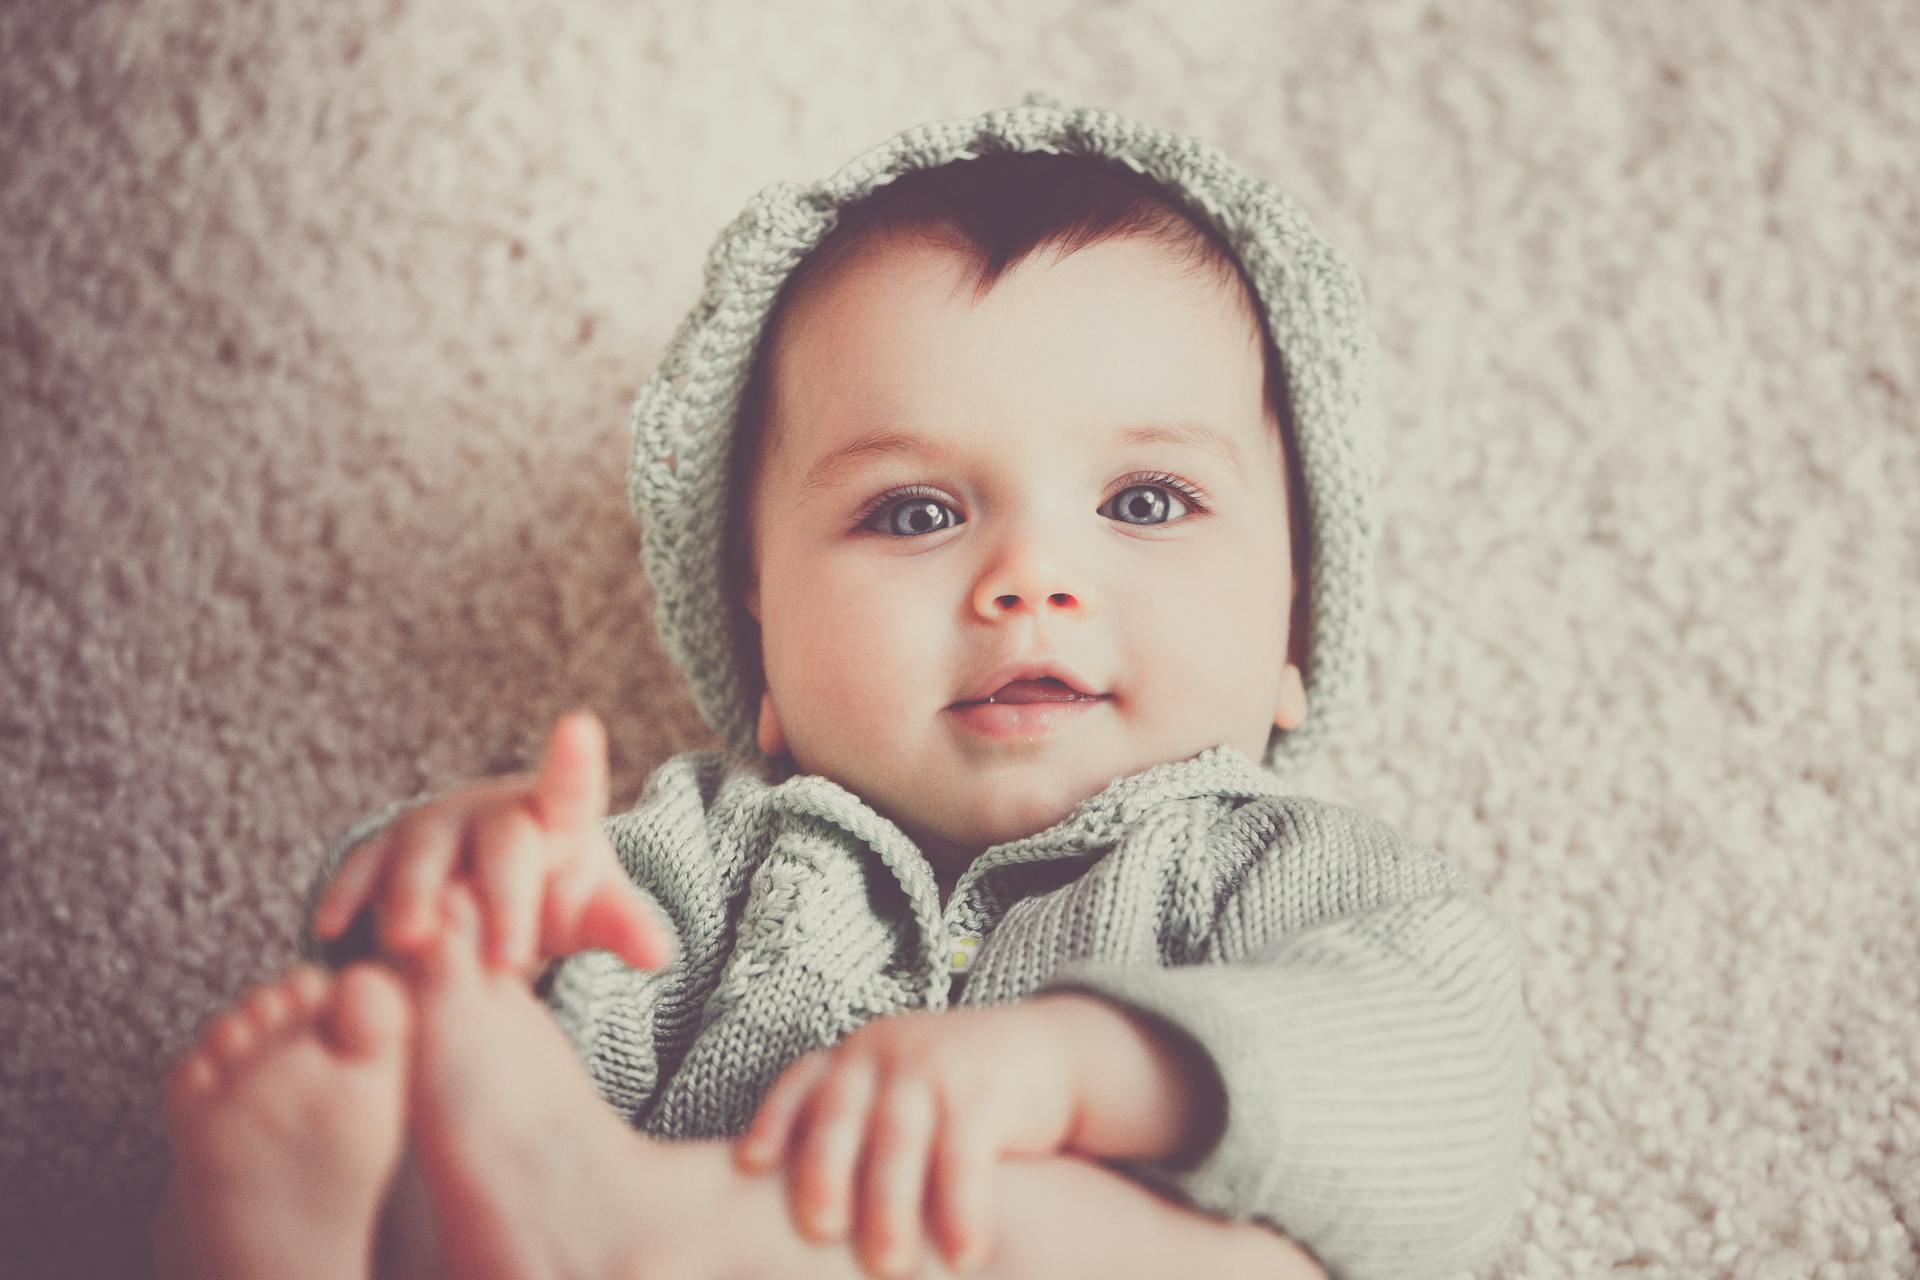 A baby boy on a carpet | Source: Pexels